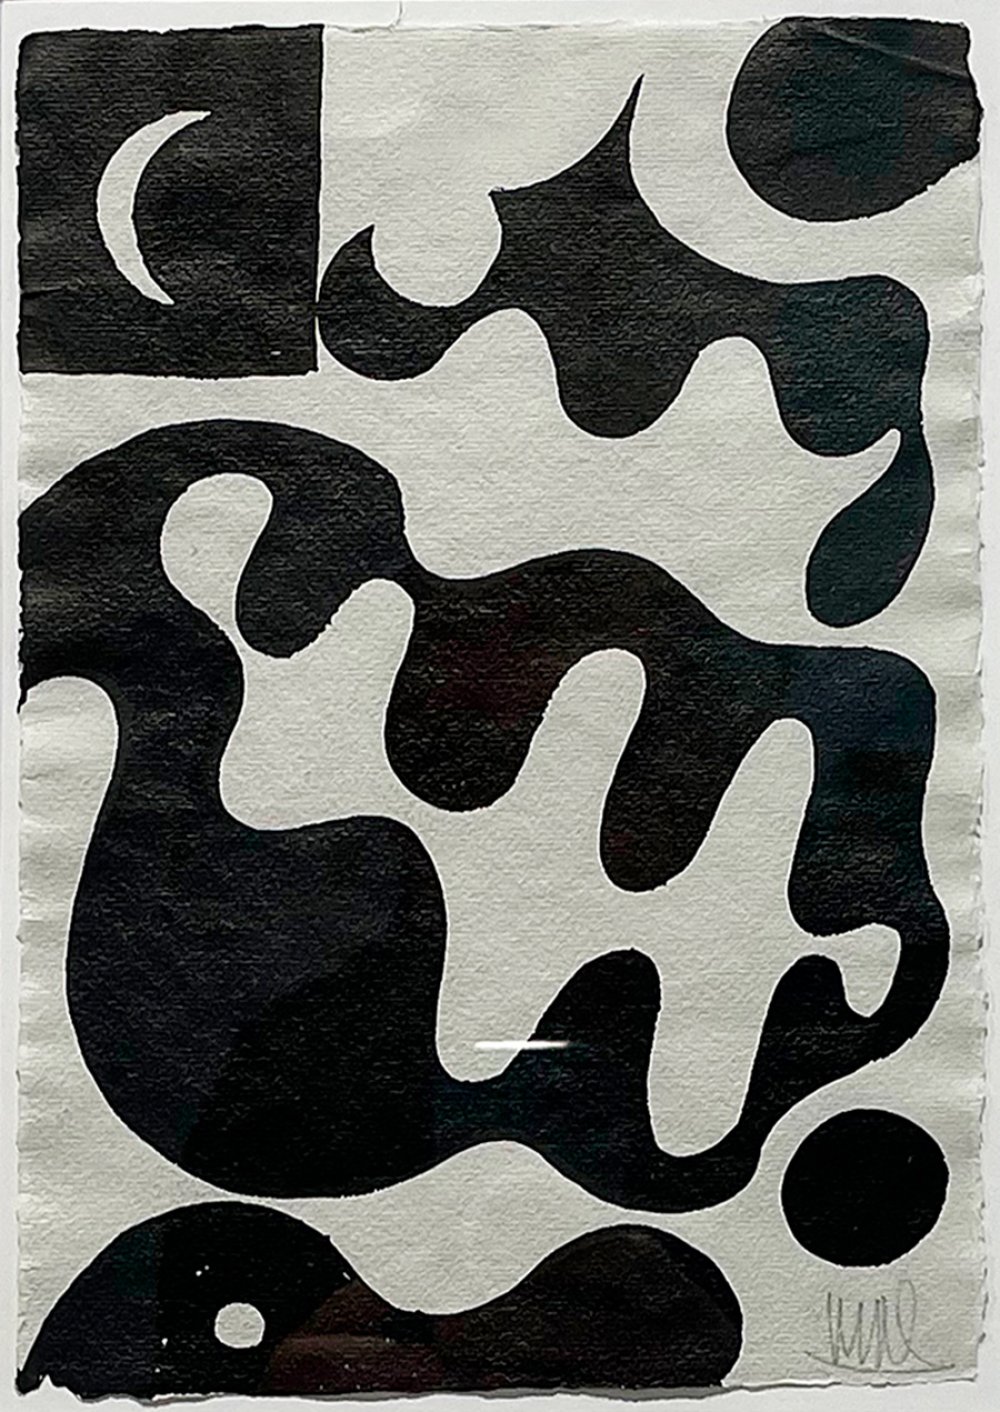 MIGUEL ÁNGEL CAMPANO, (Madrid, 1948 - Cercedilla, 2018).Untitled, 1995.Acrylic on paper.Size: 26 x